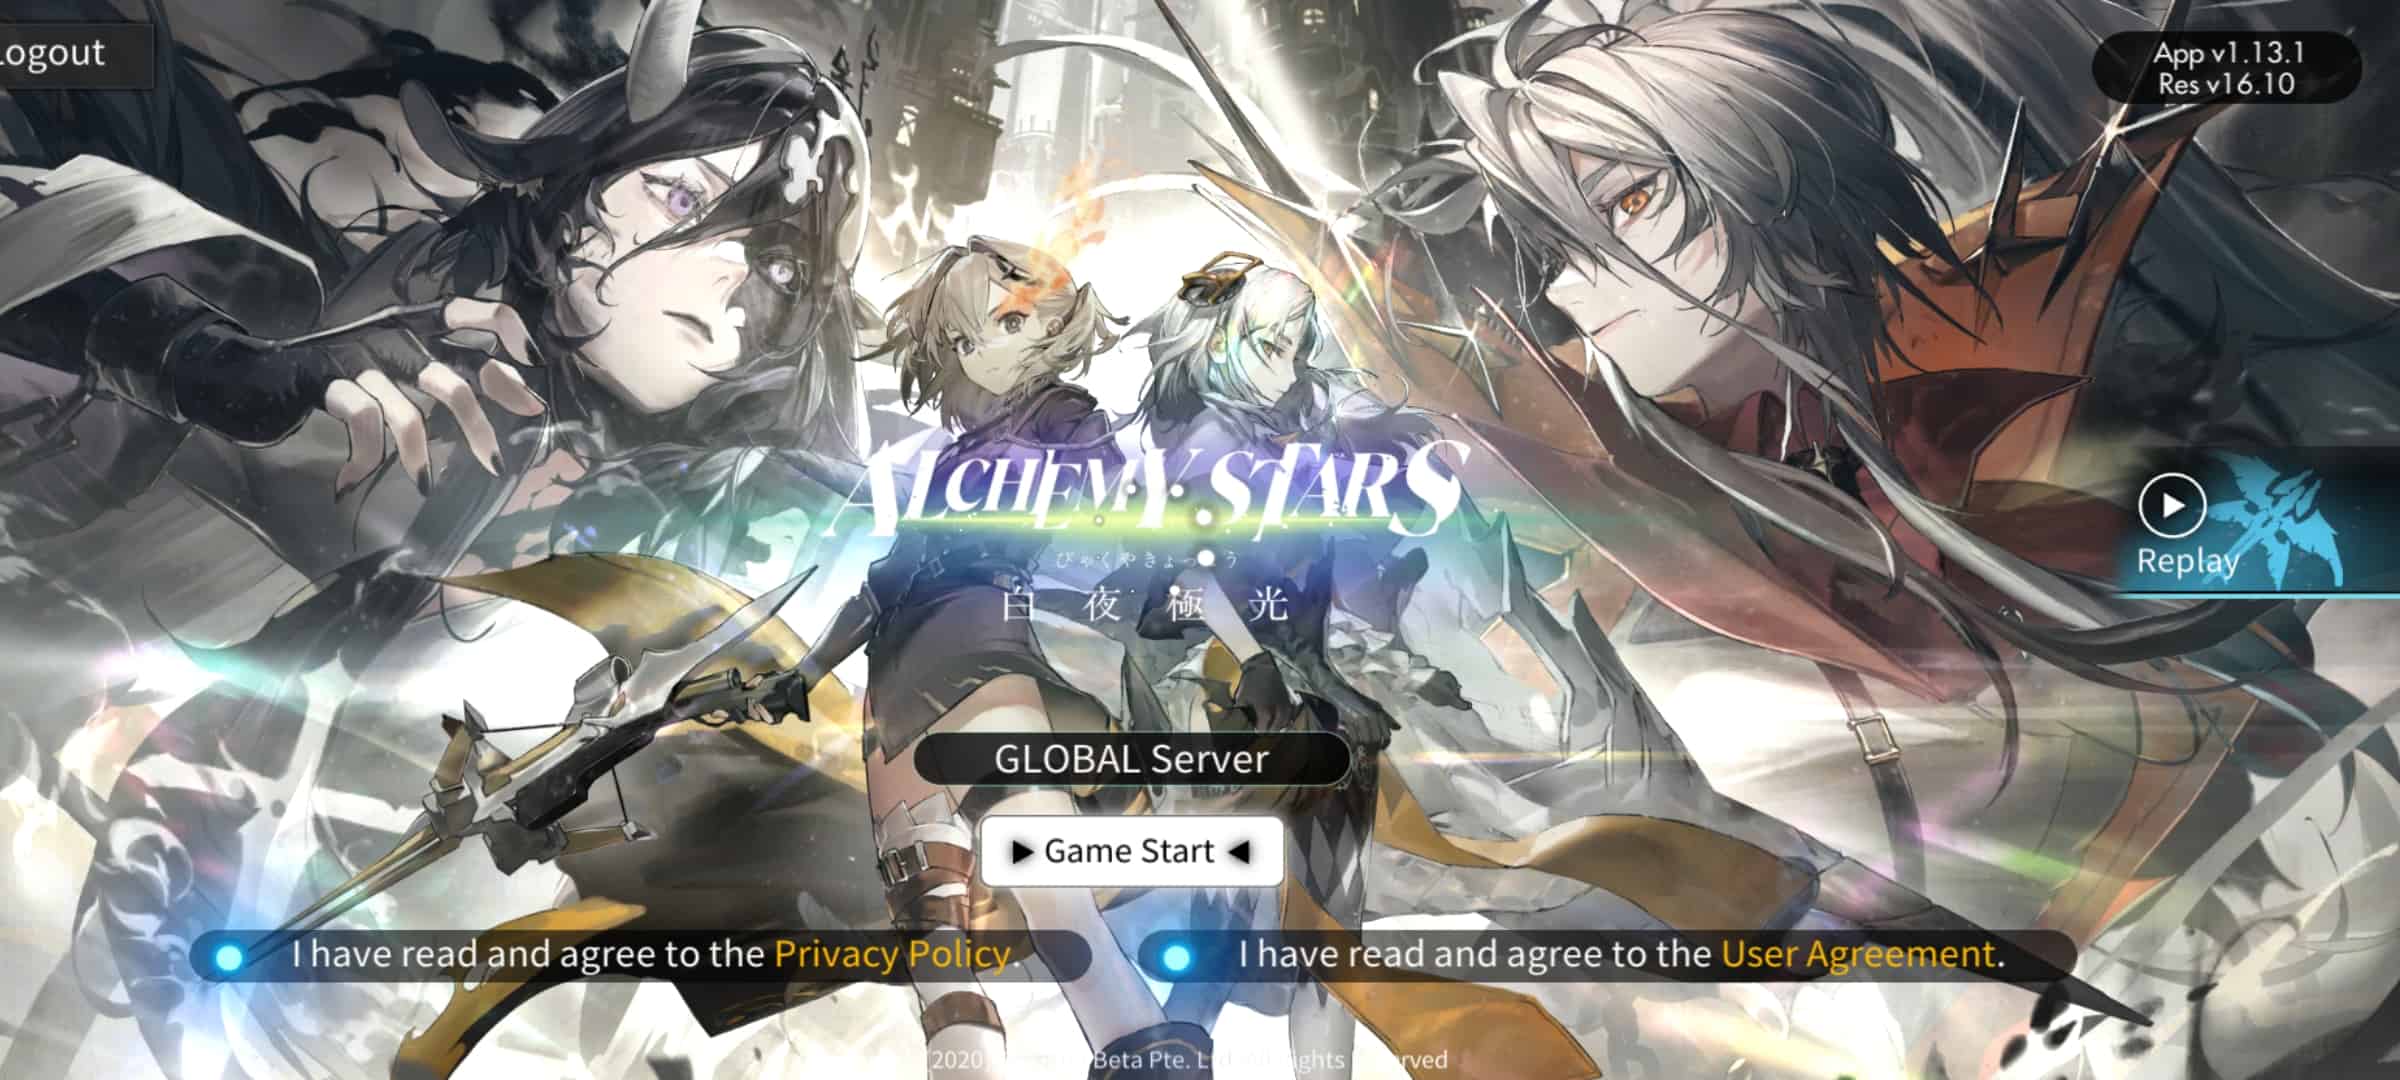 Login screen for Alchemy Stars